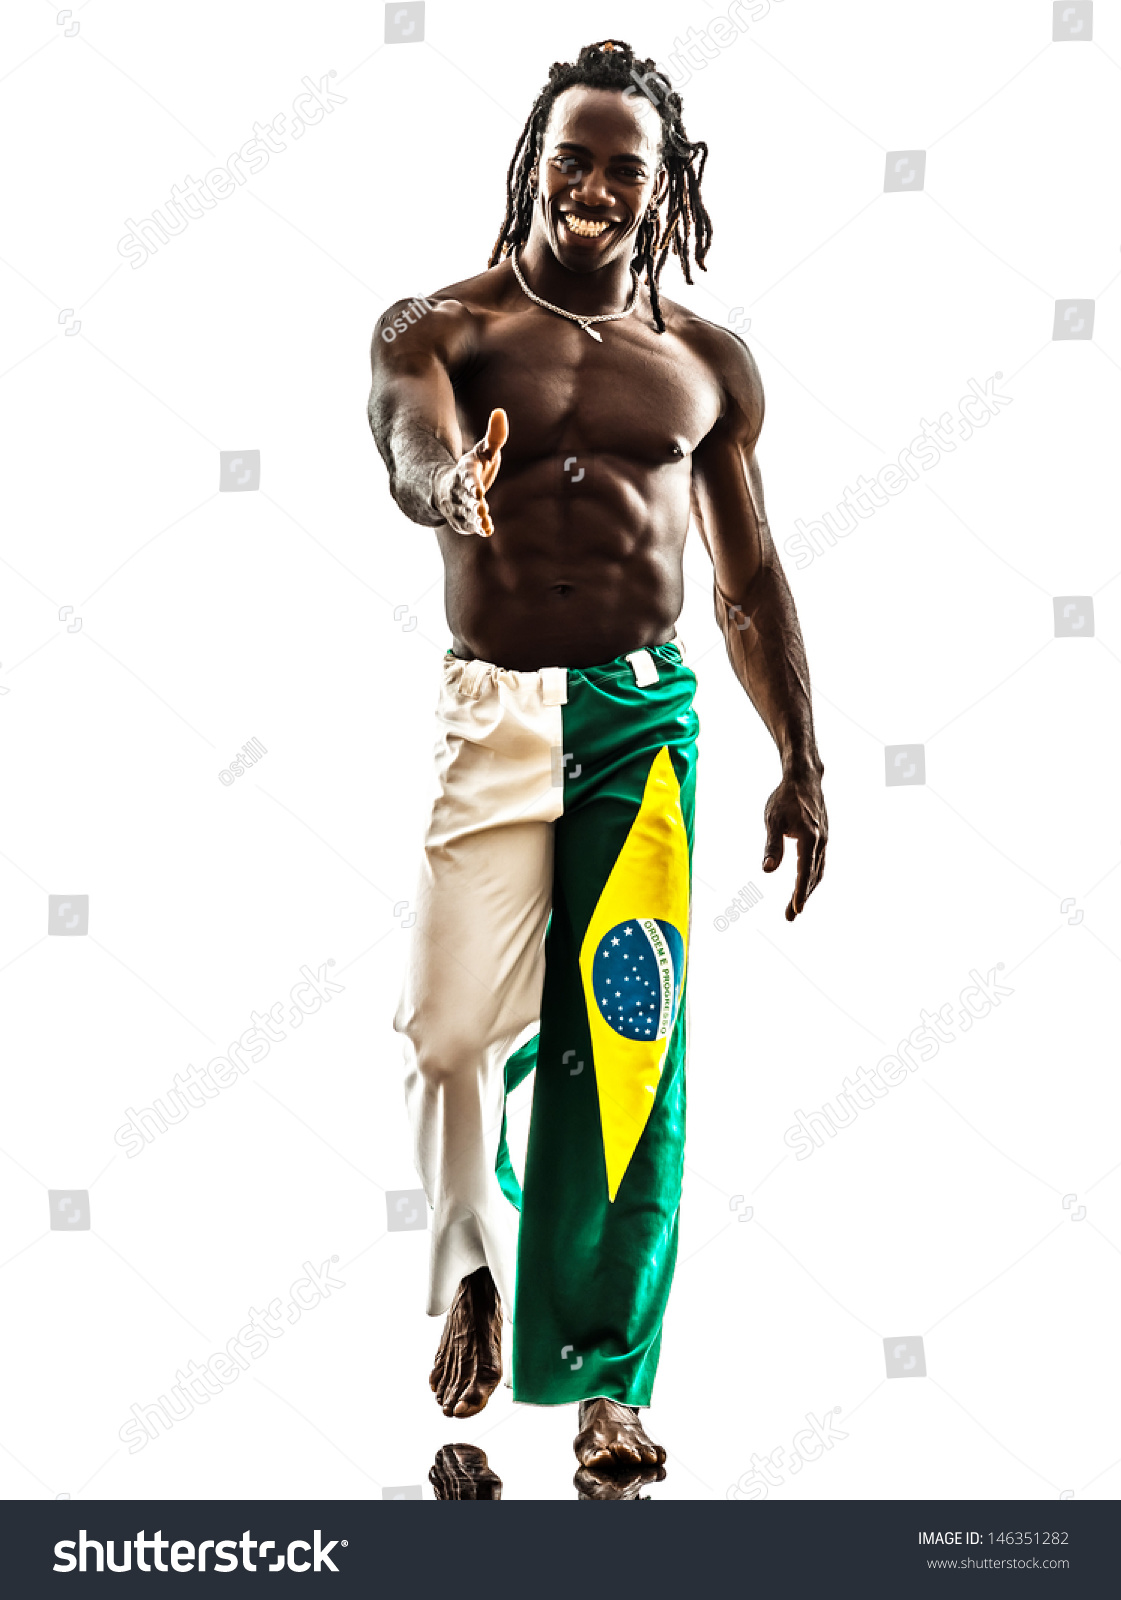 stock-photo-one-brazilian-black-man-walking-saluting-handshake-on-white-background-146351282.jpg